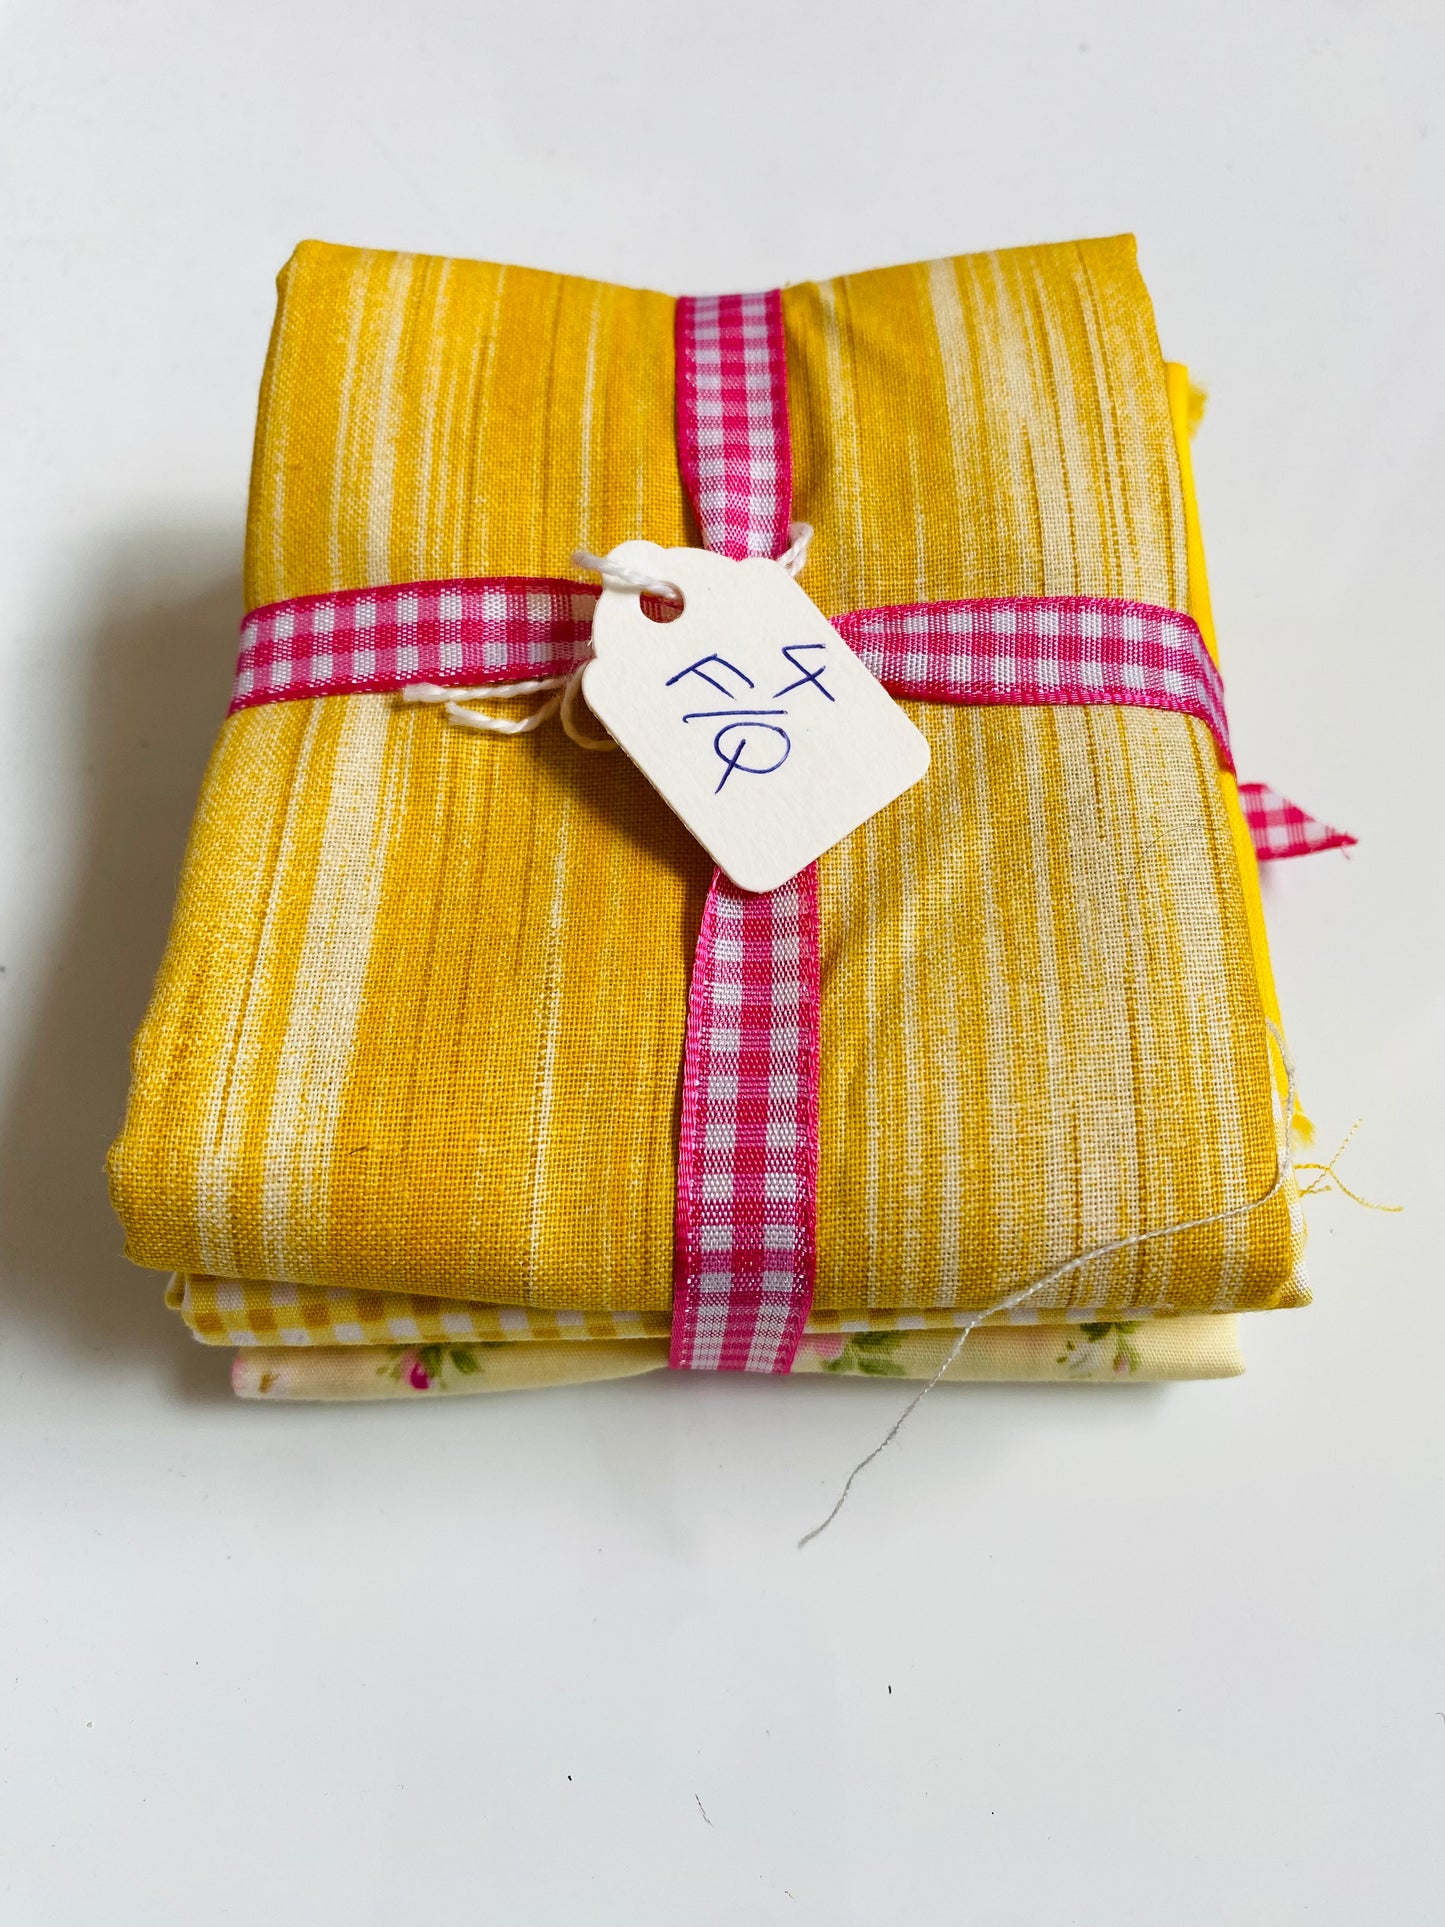 Fabric Fat Quarter Bundle - 'Spring Yellows' - 100% Cotton